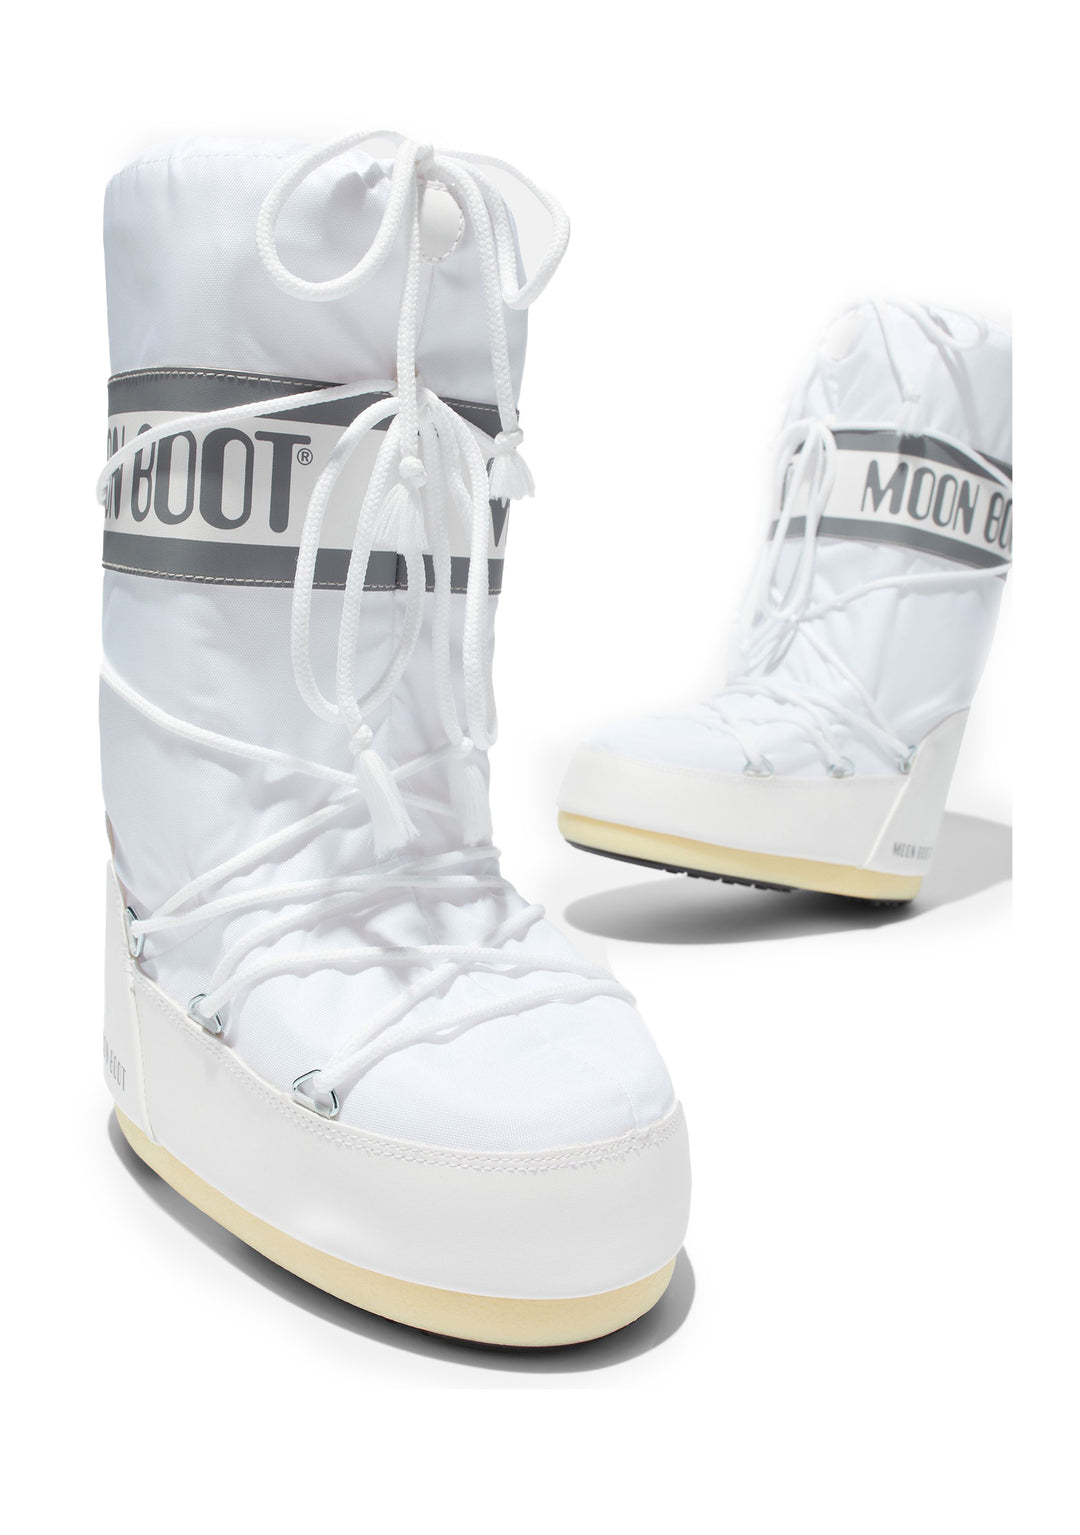 STIVALE UNISEX Bianco Moon Boot